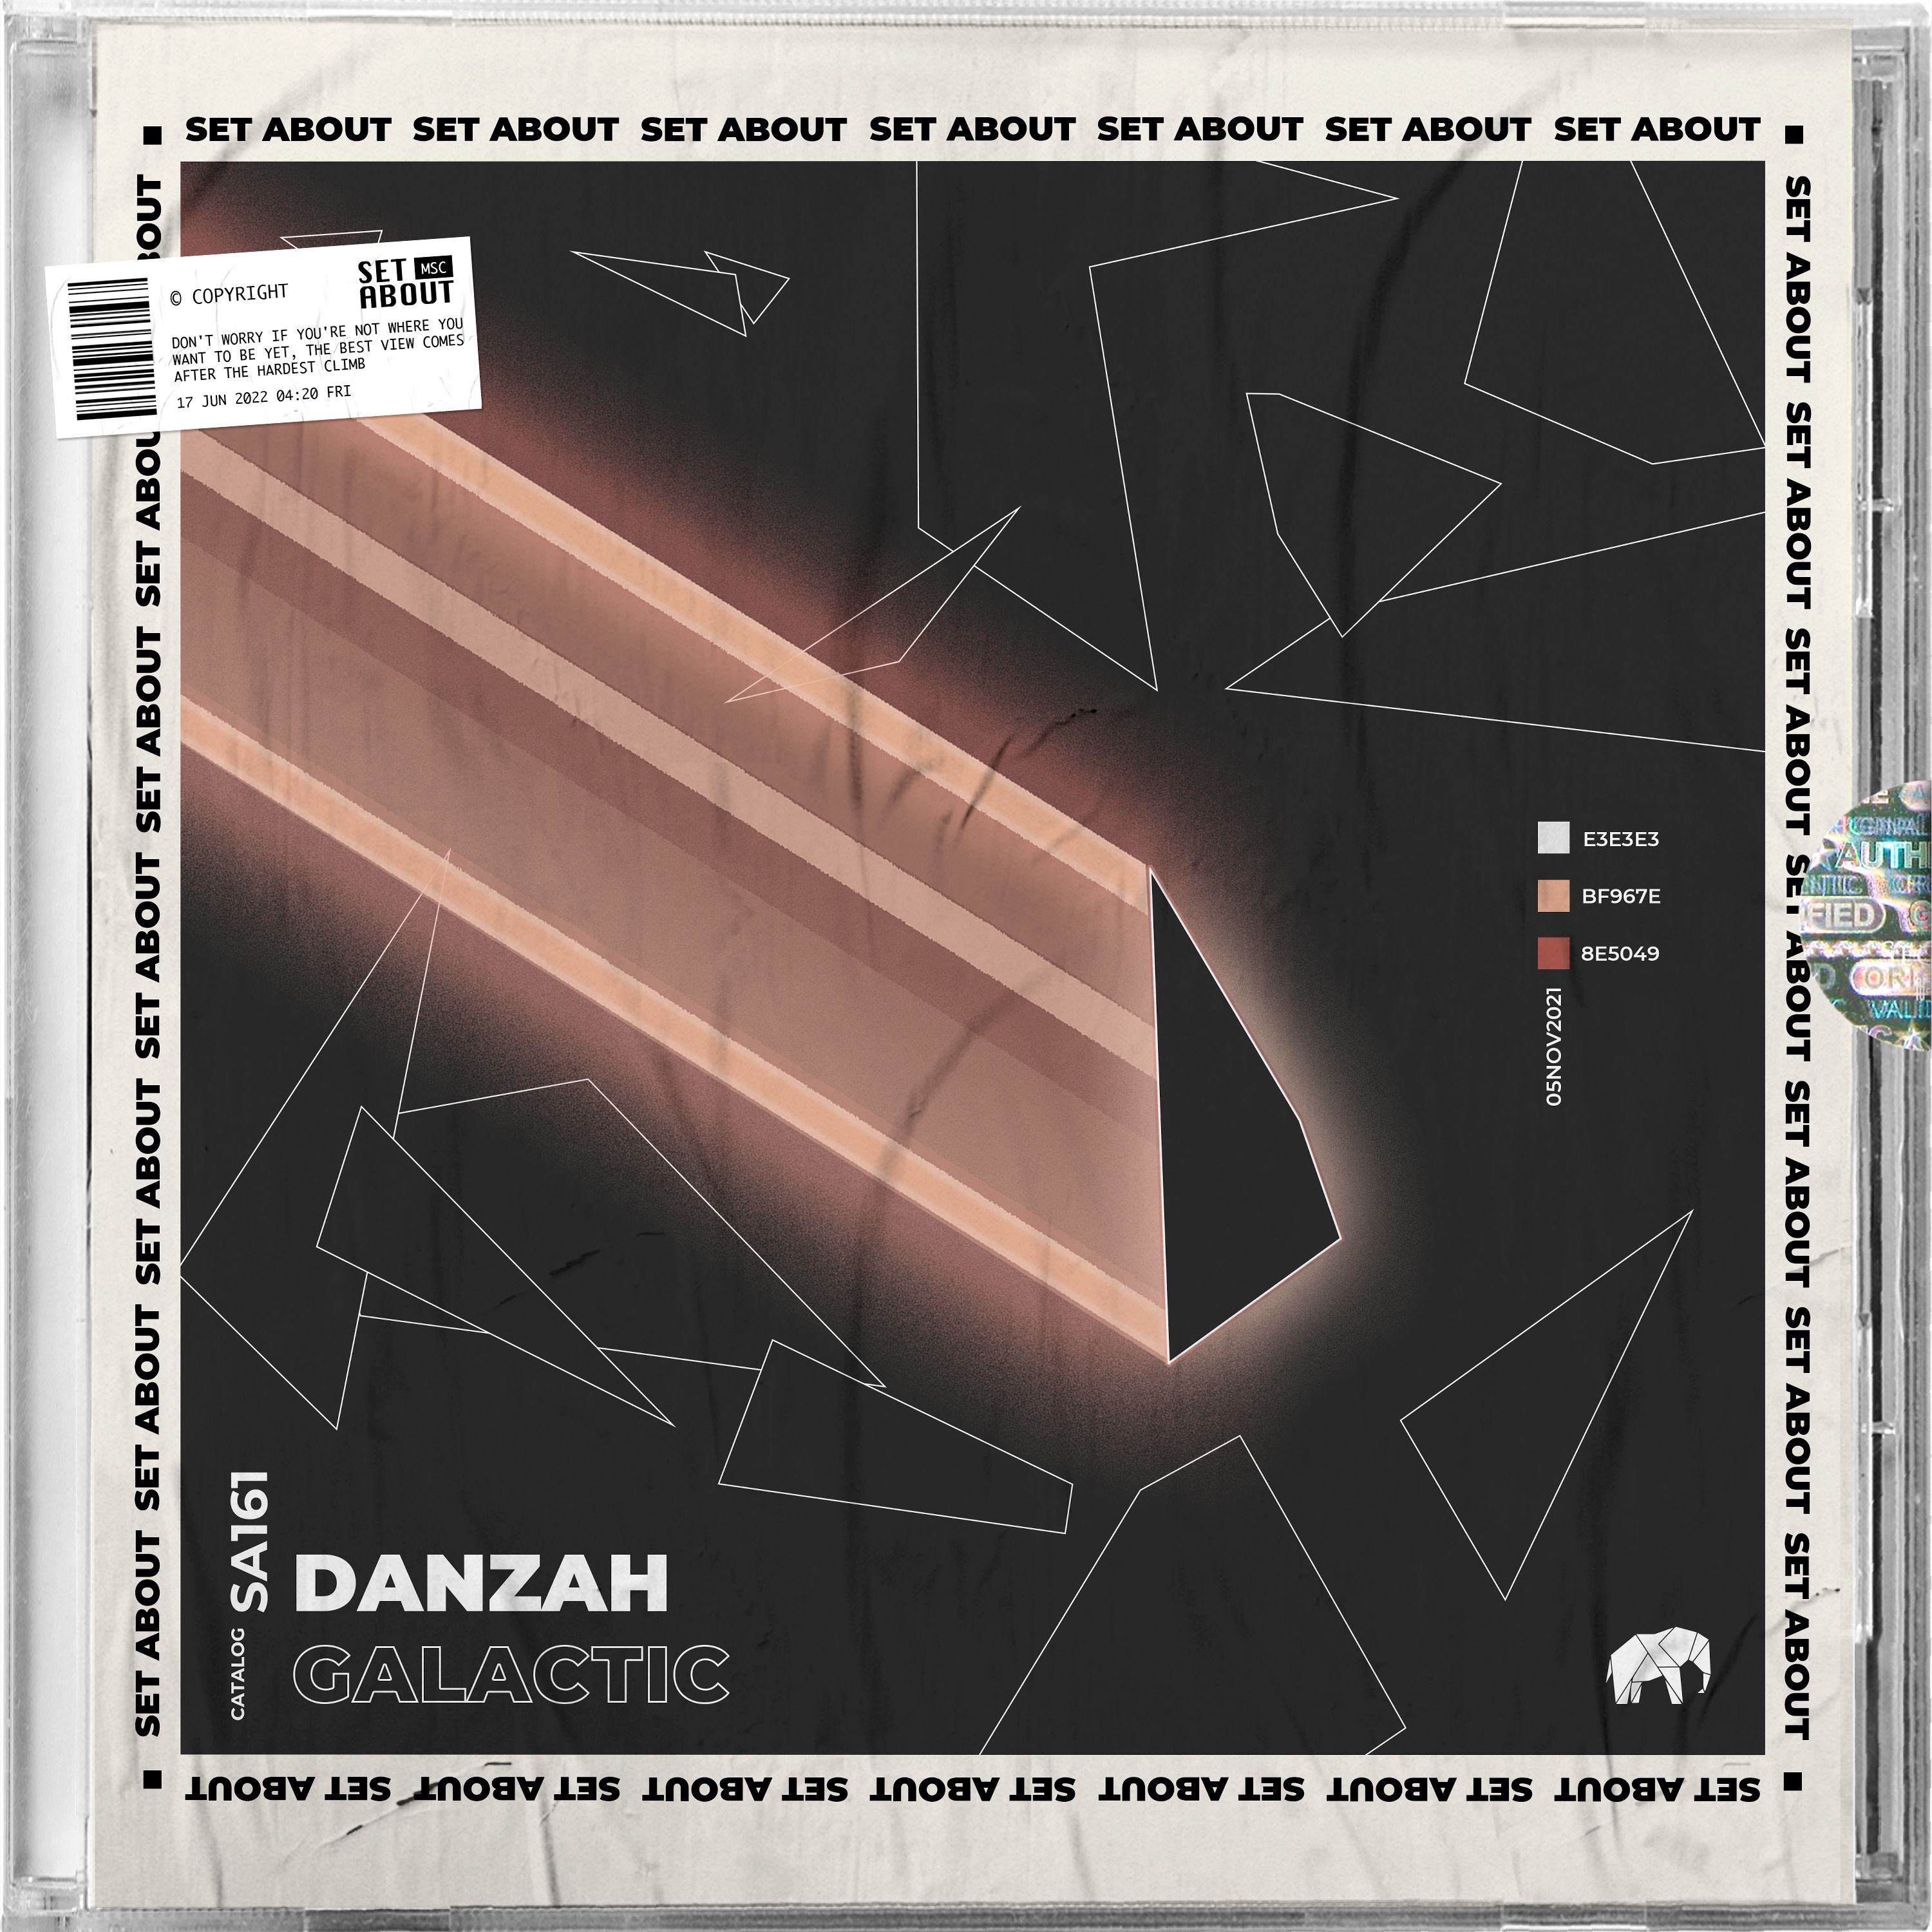 Landa PREMIERE: DANZAH - Galactic (Original Mix) [Set About]